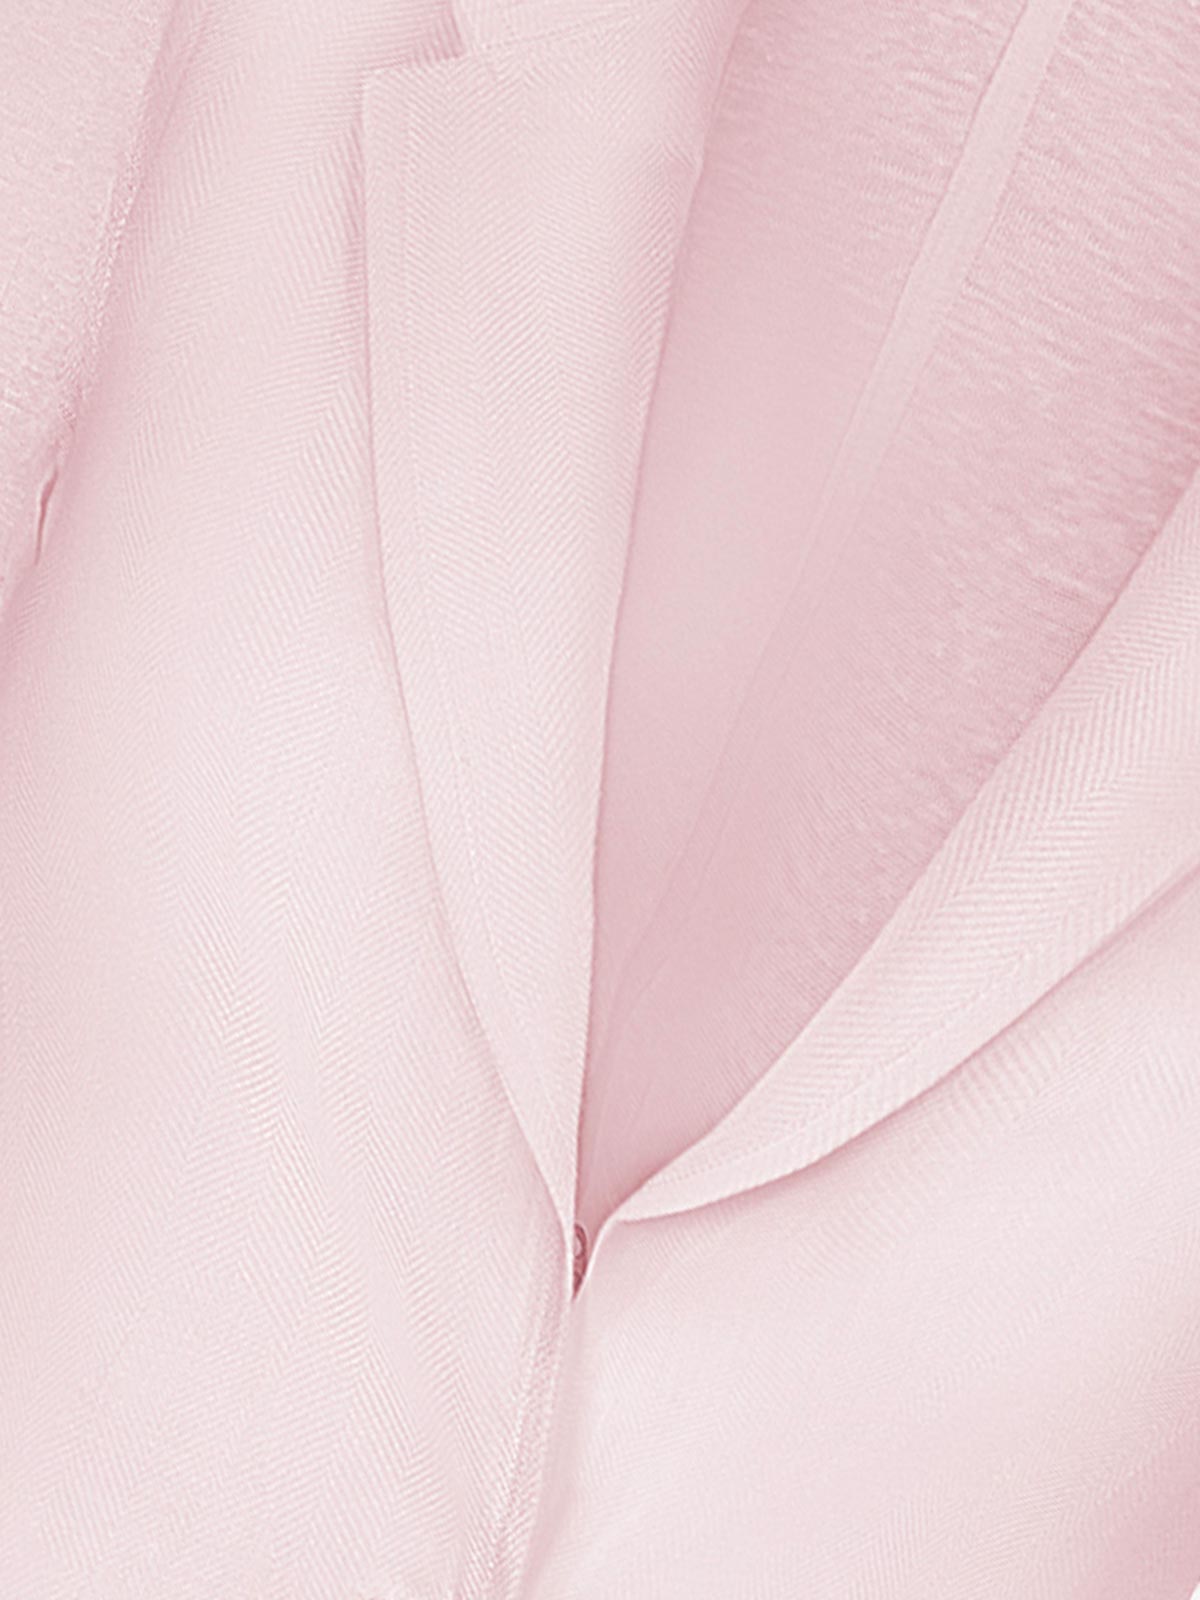 Giacca Sud Woman 100% Capri pink linen jacket detail